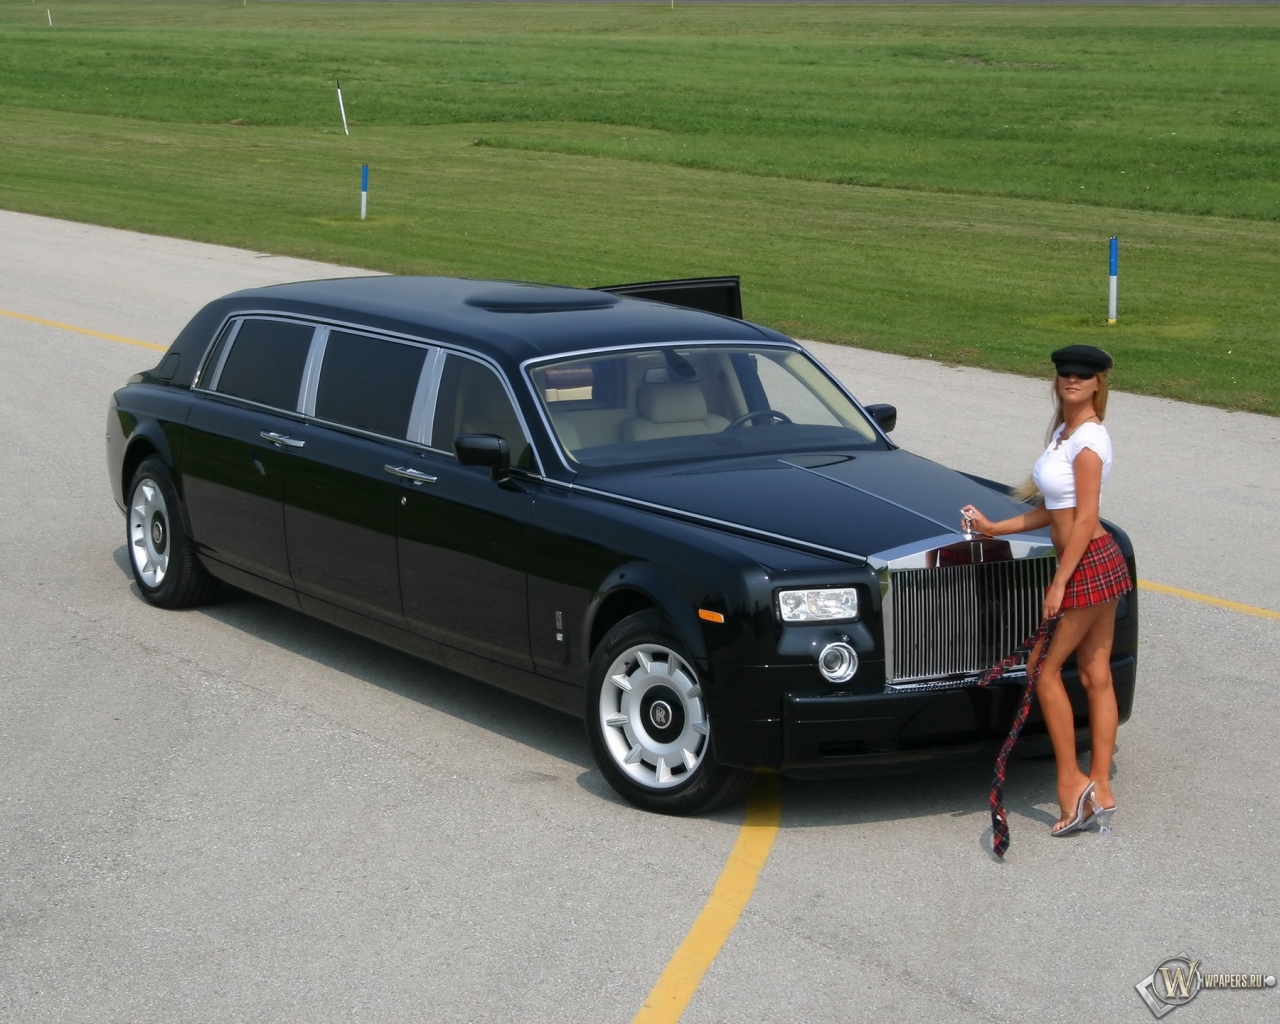 Rolls-Royce 1280x1024